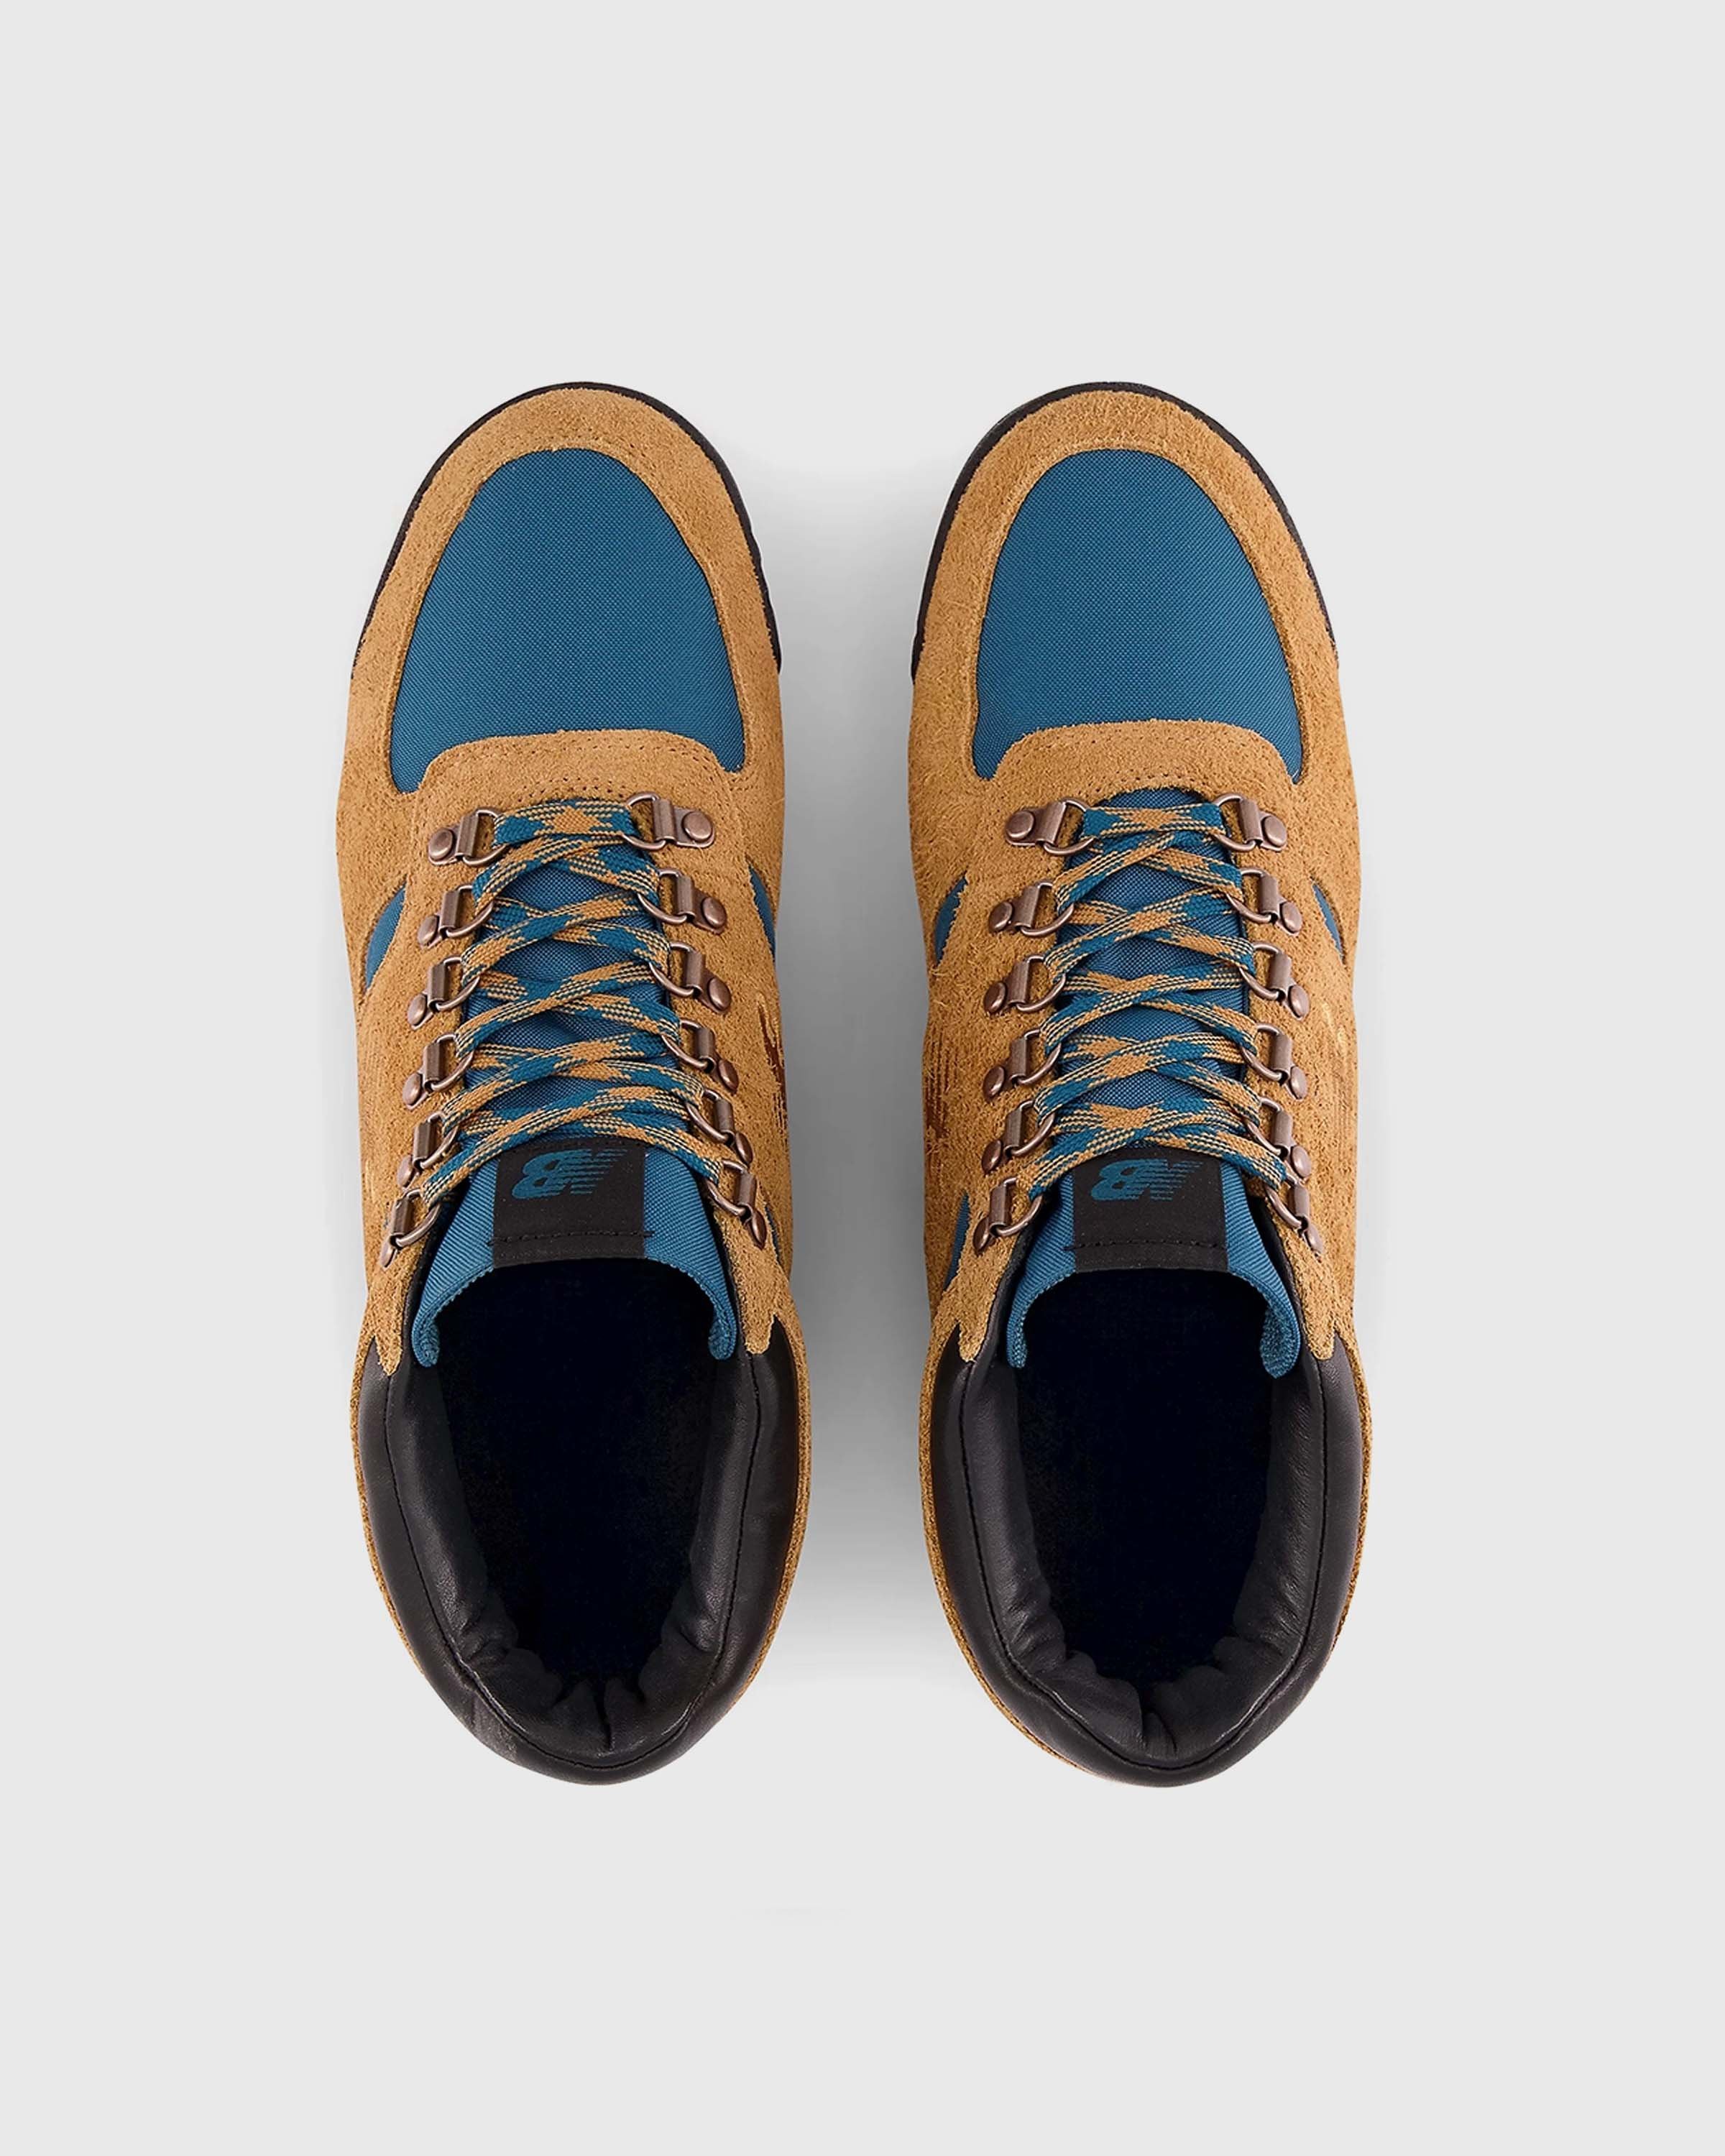 New Balance - URAINAA Tan - Footwear - Brown - Image 5